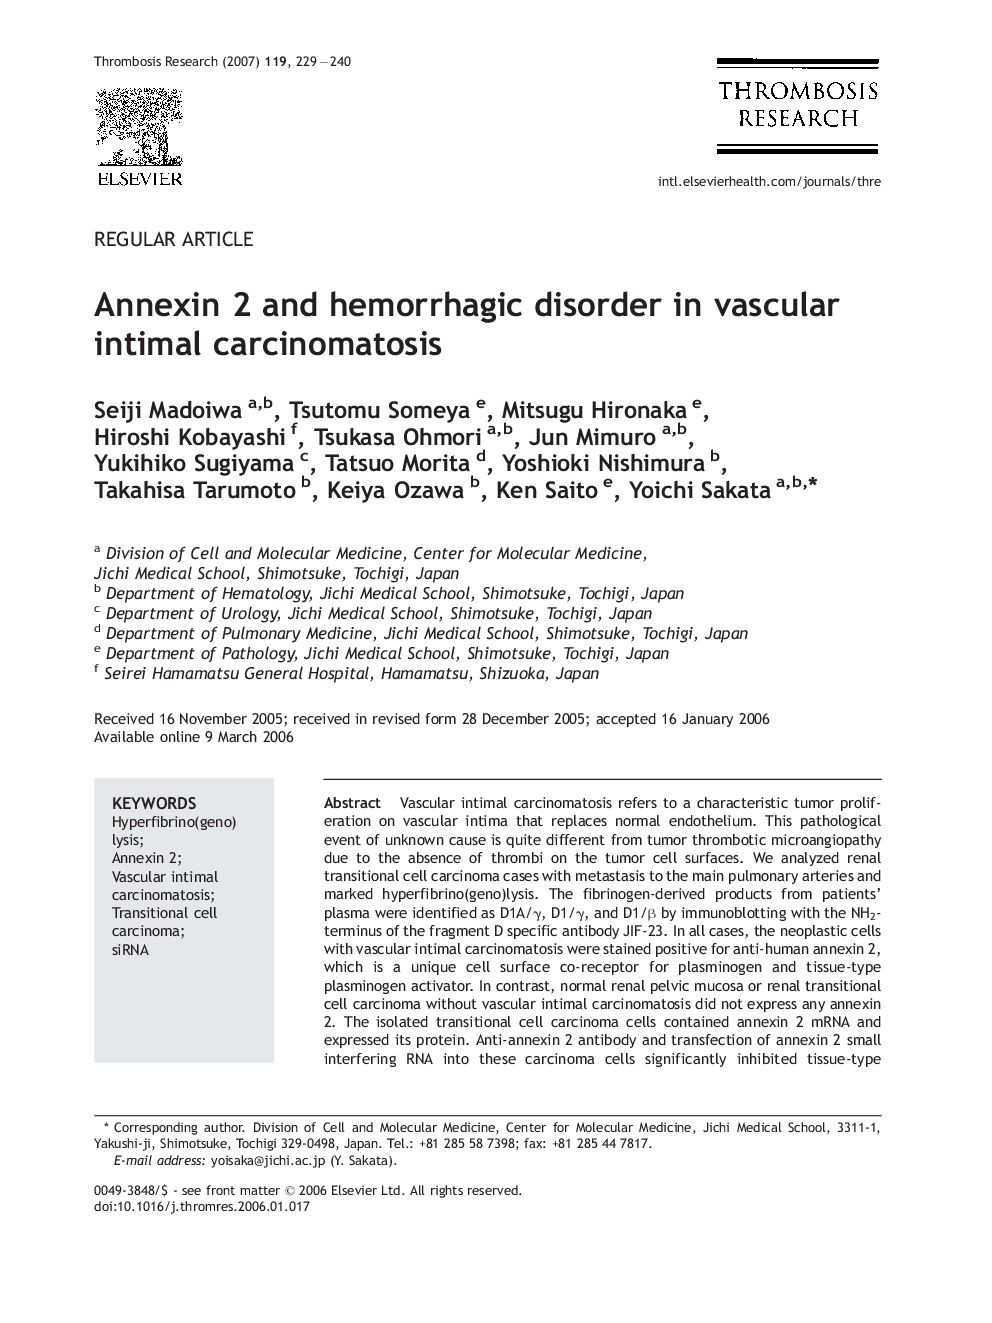 Annexin 2 and hemorrhagic disorder in vascular intimal carcinomatosis